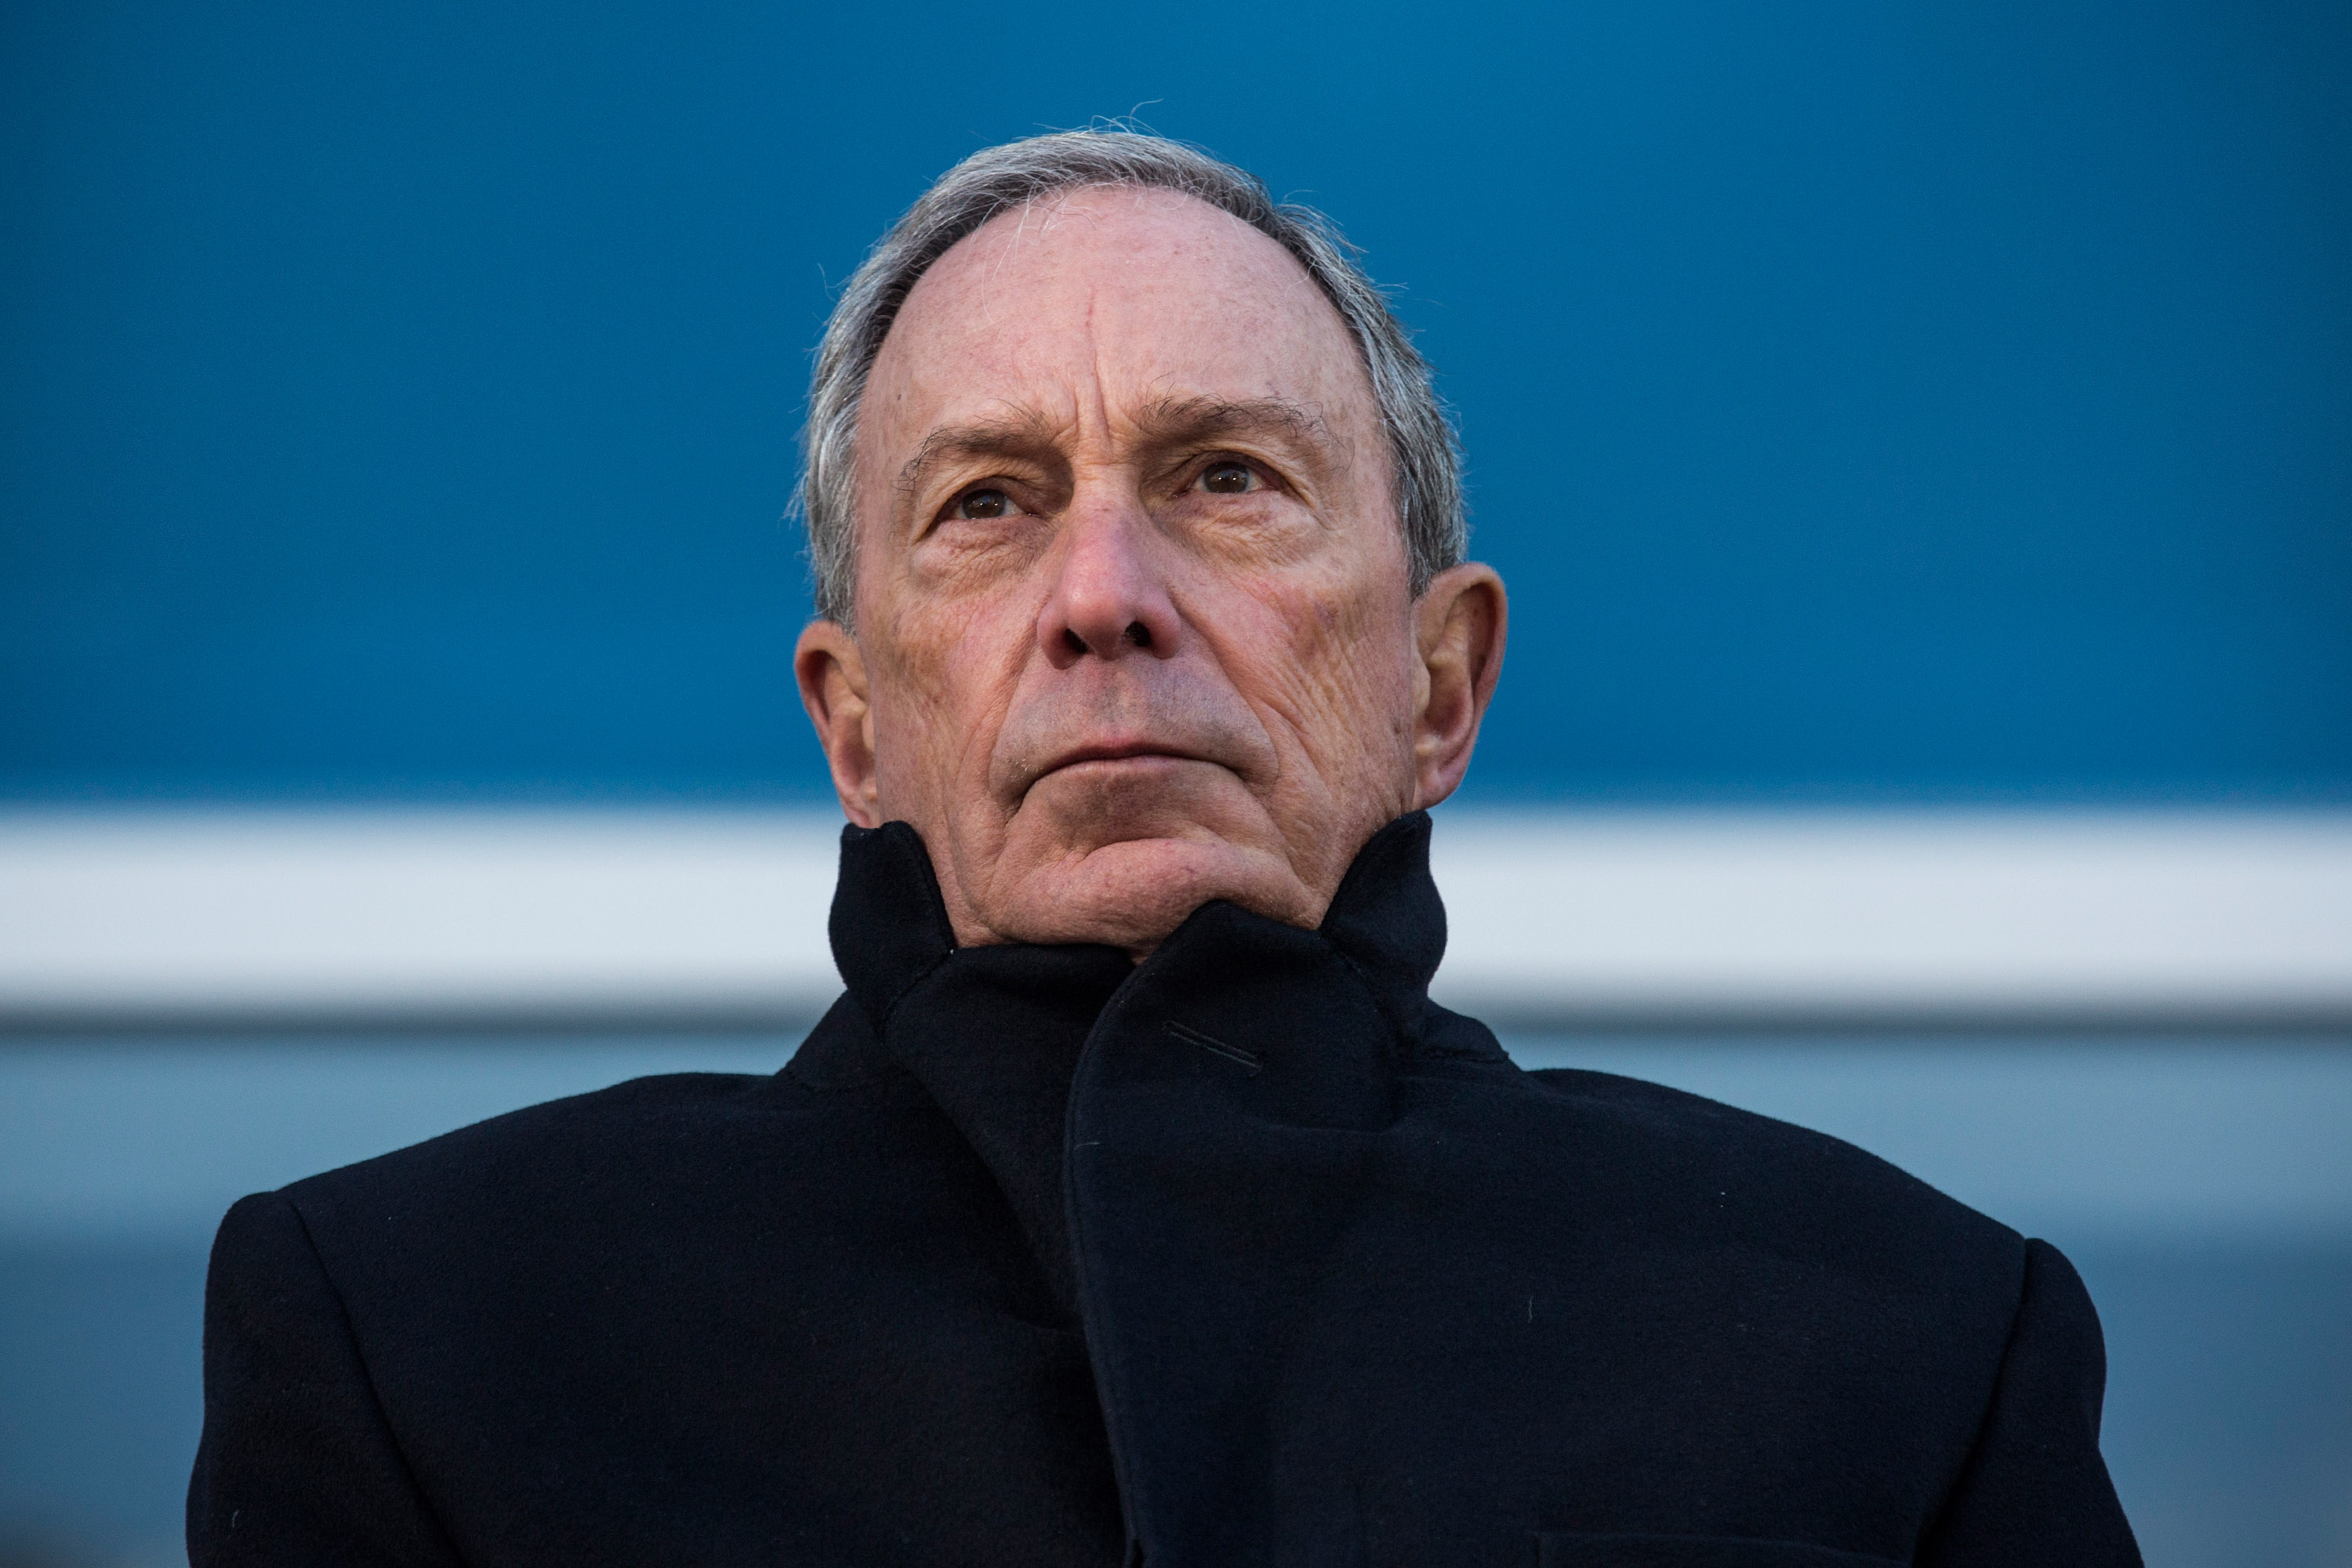 Former New York mayor Michael Bloomberg. Photo: AFP